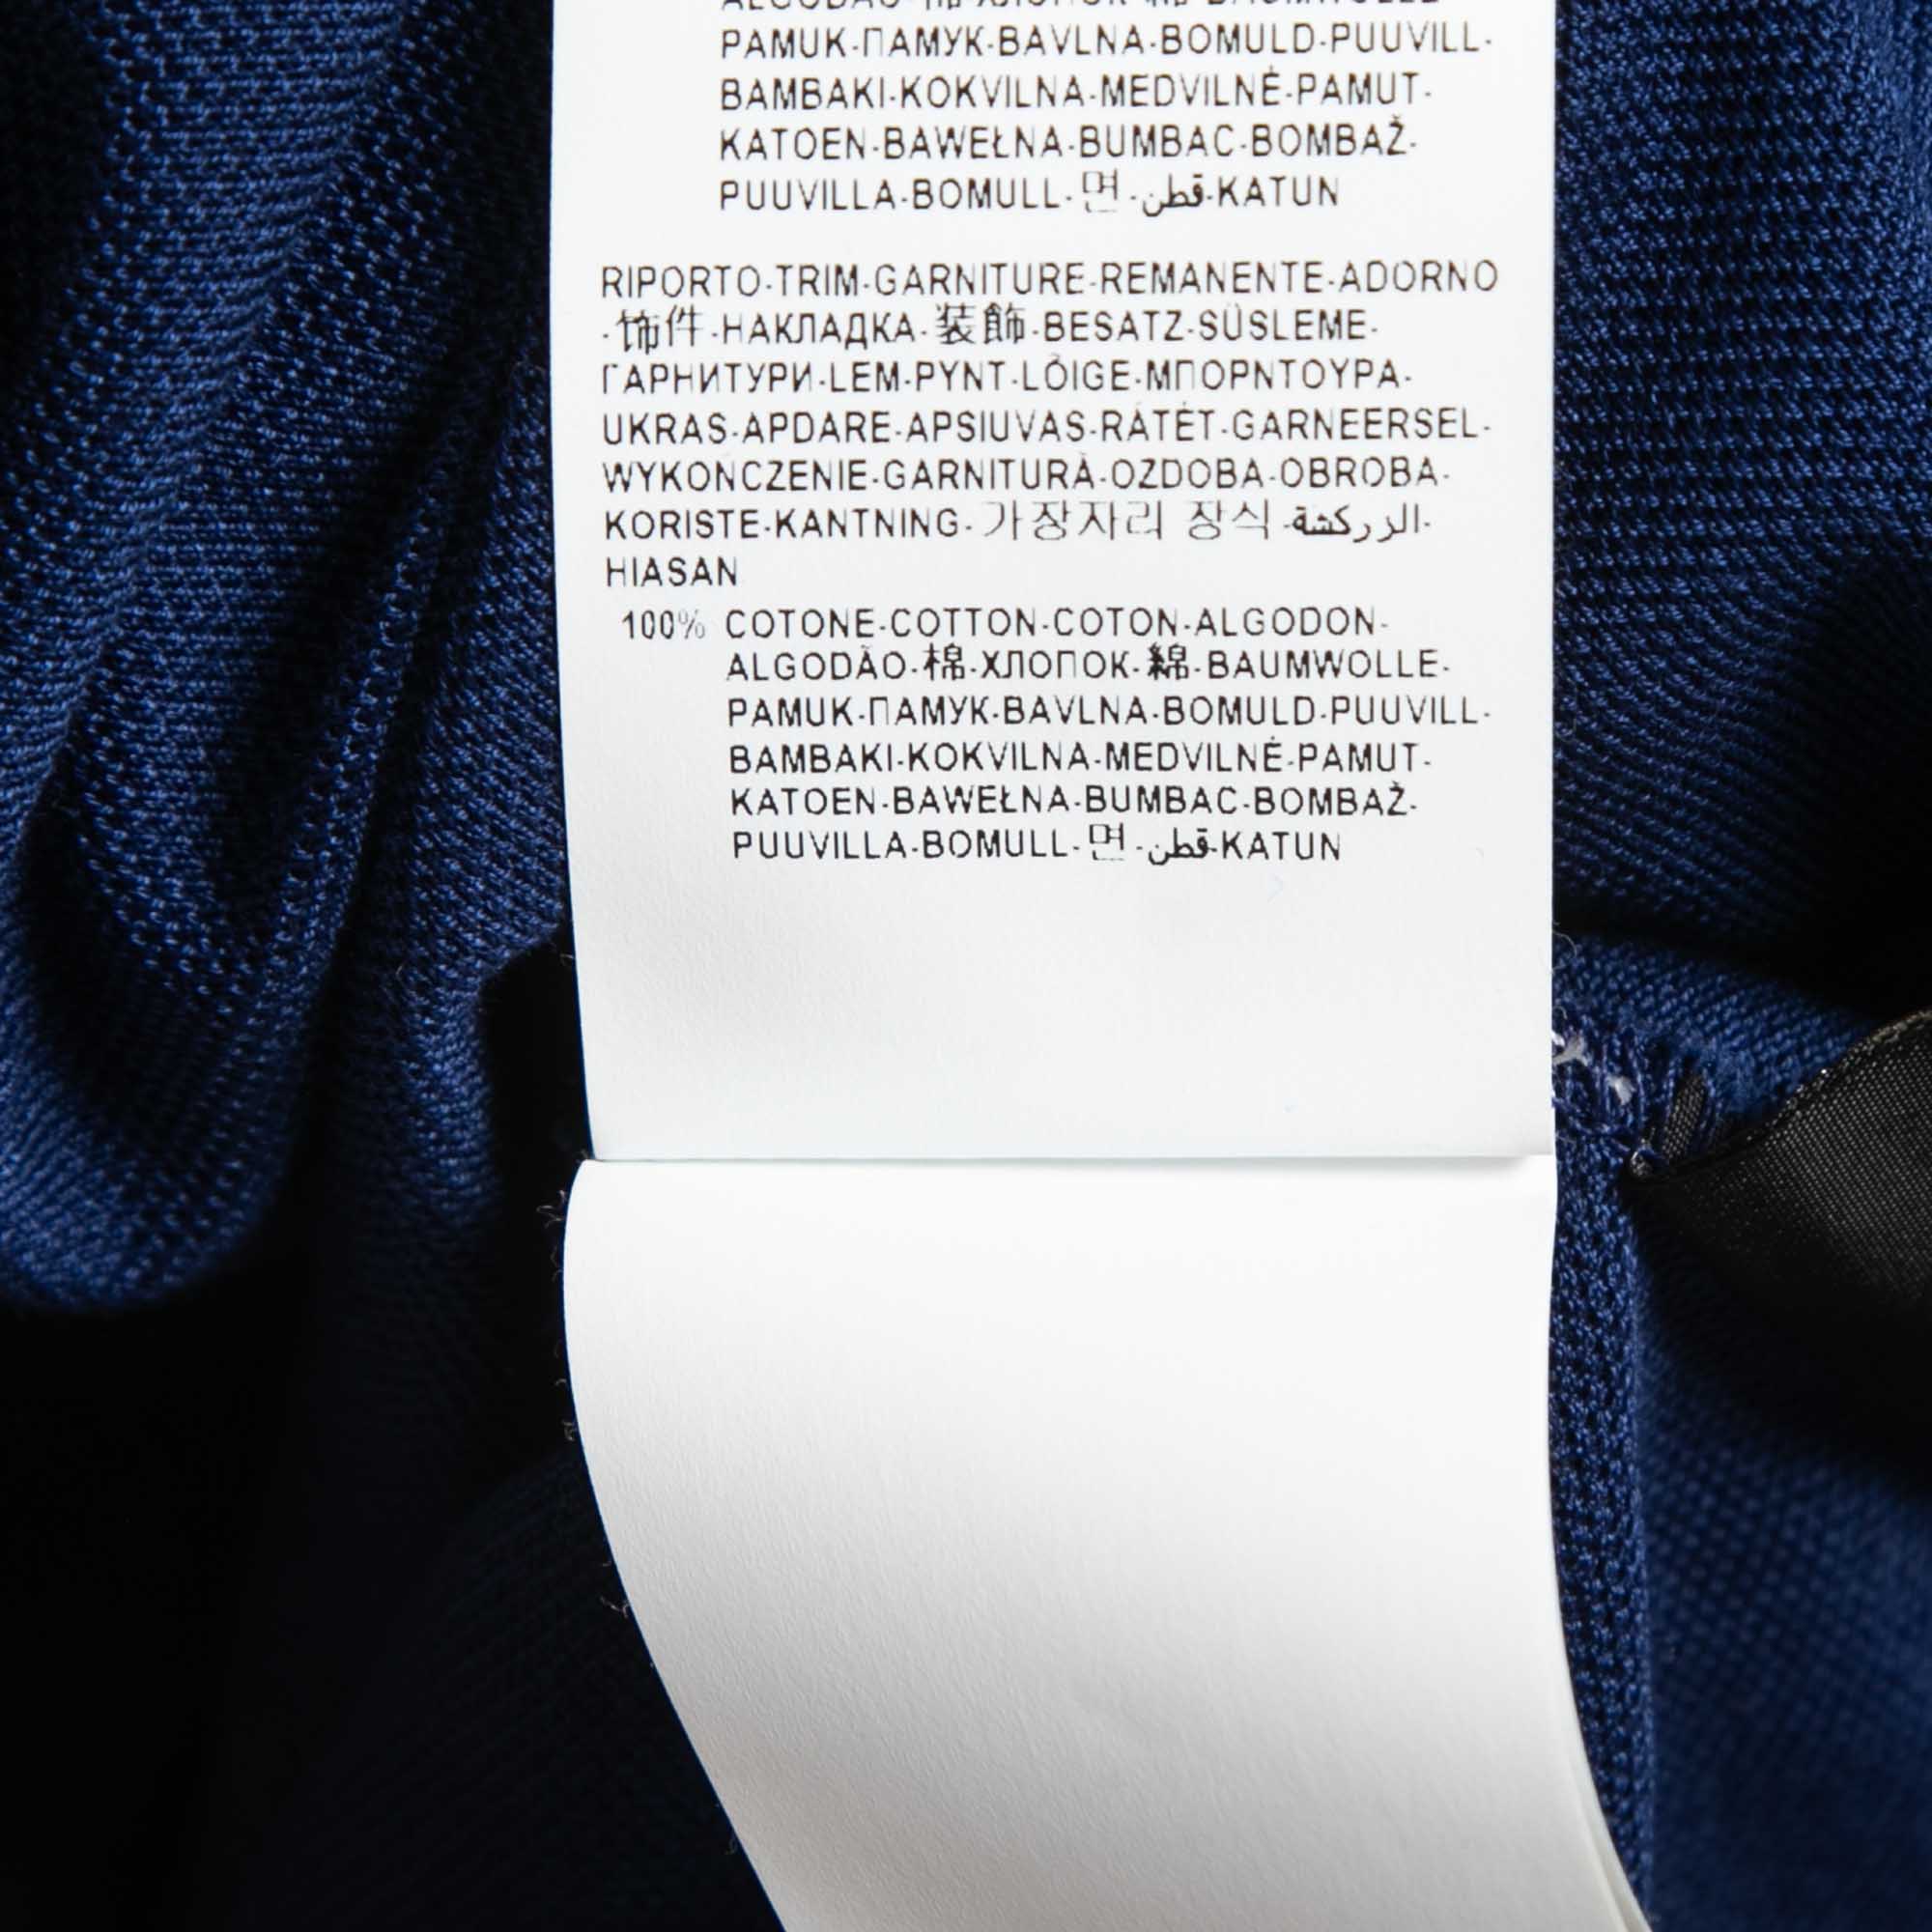 Versace Navy Blue Cotton Knit Zip Front Polo T-Shirt 3XL